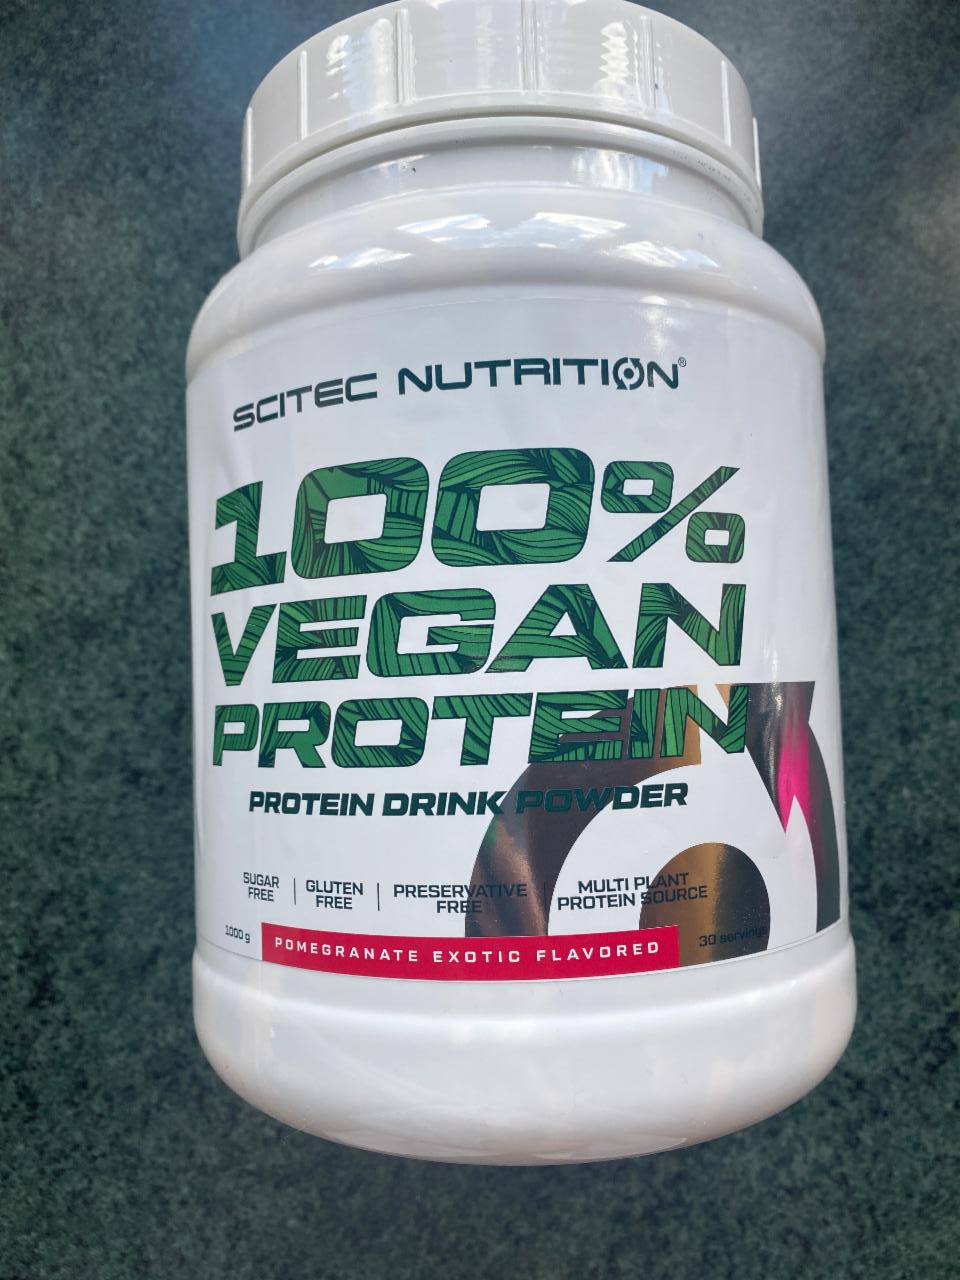 Fotografie - 100% vegan protein drink powder Pomegranate exotic flavored Scitec Nutrition